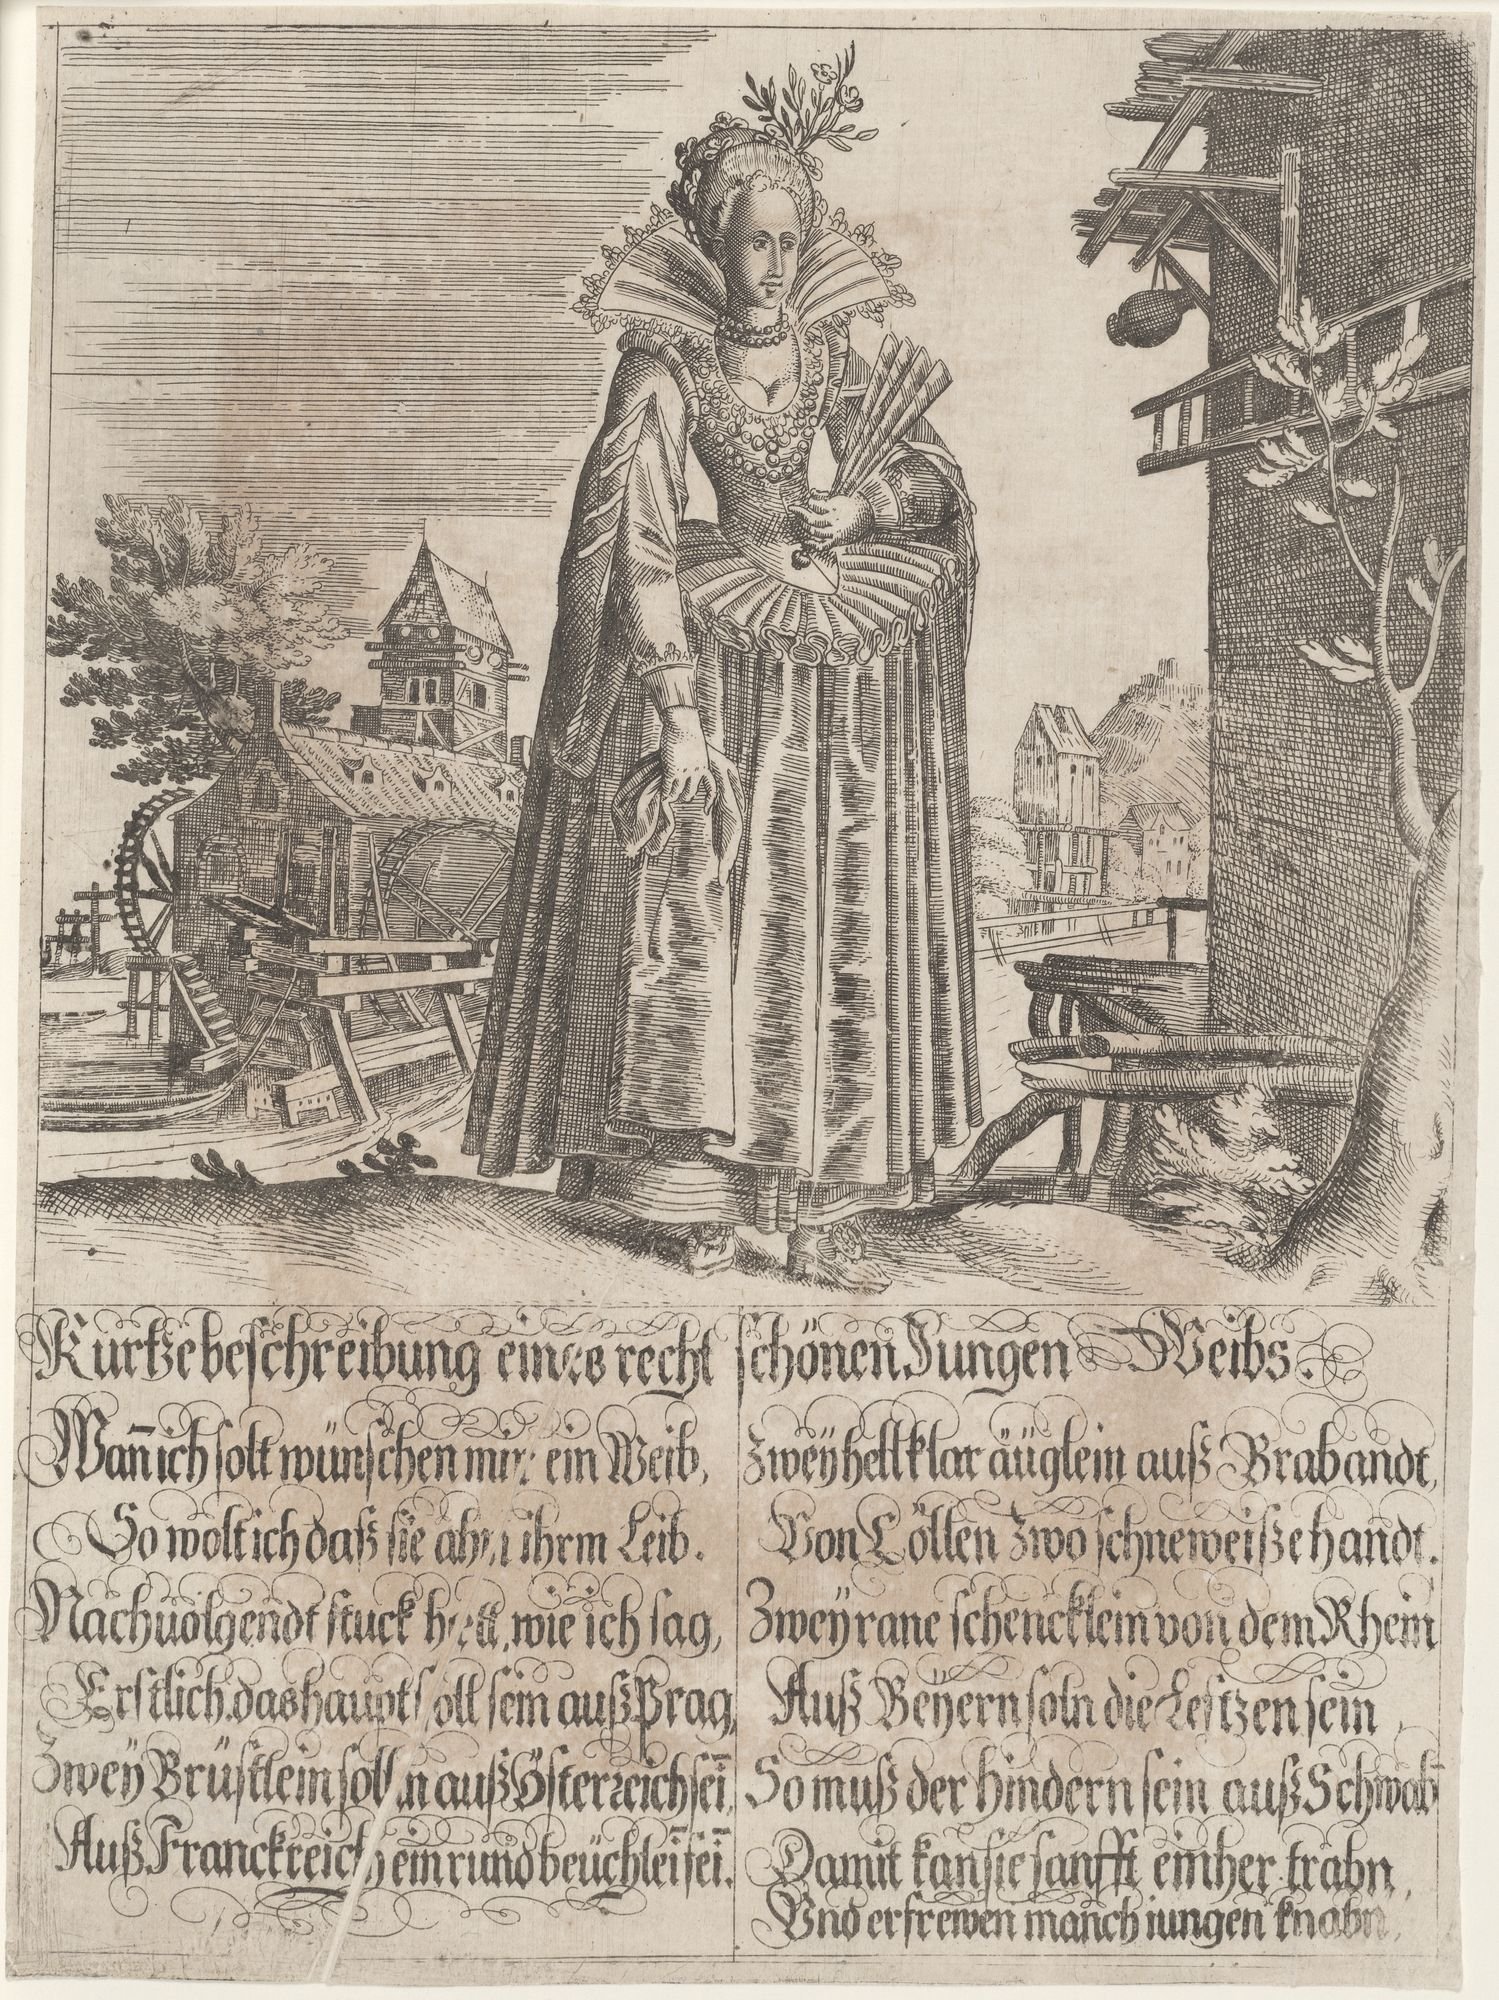 Kurtze beschreibung eines recht schönen Jungen Weibs. (Kulturstiftung Sachsen-Anhalt Public Domain Mark)